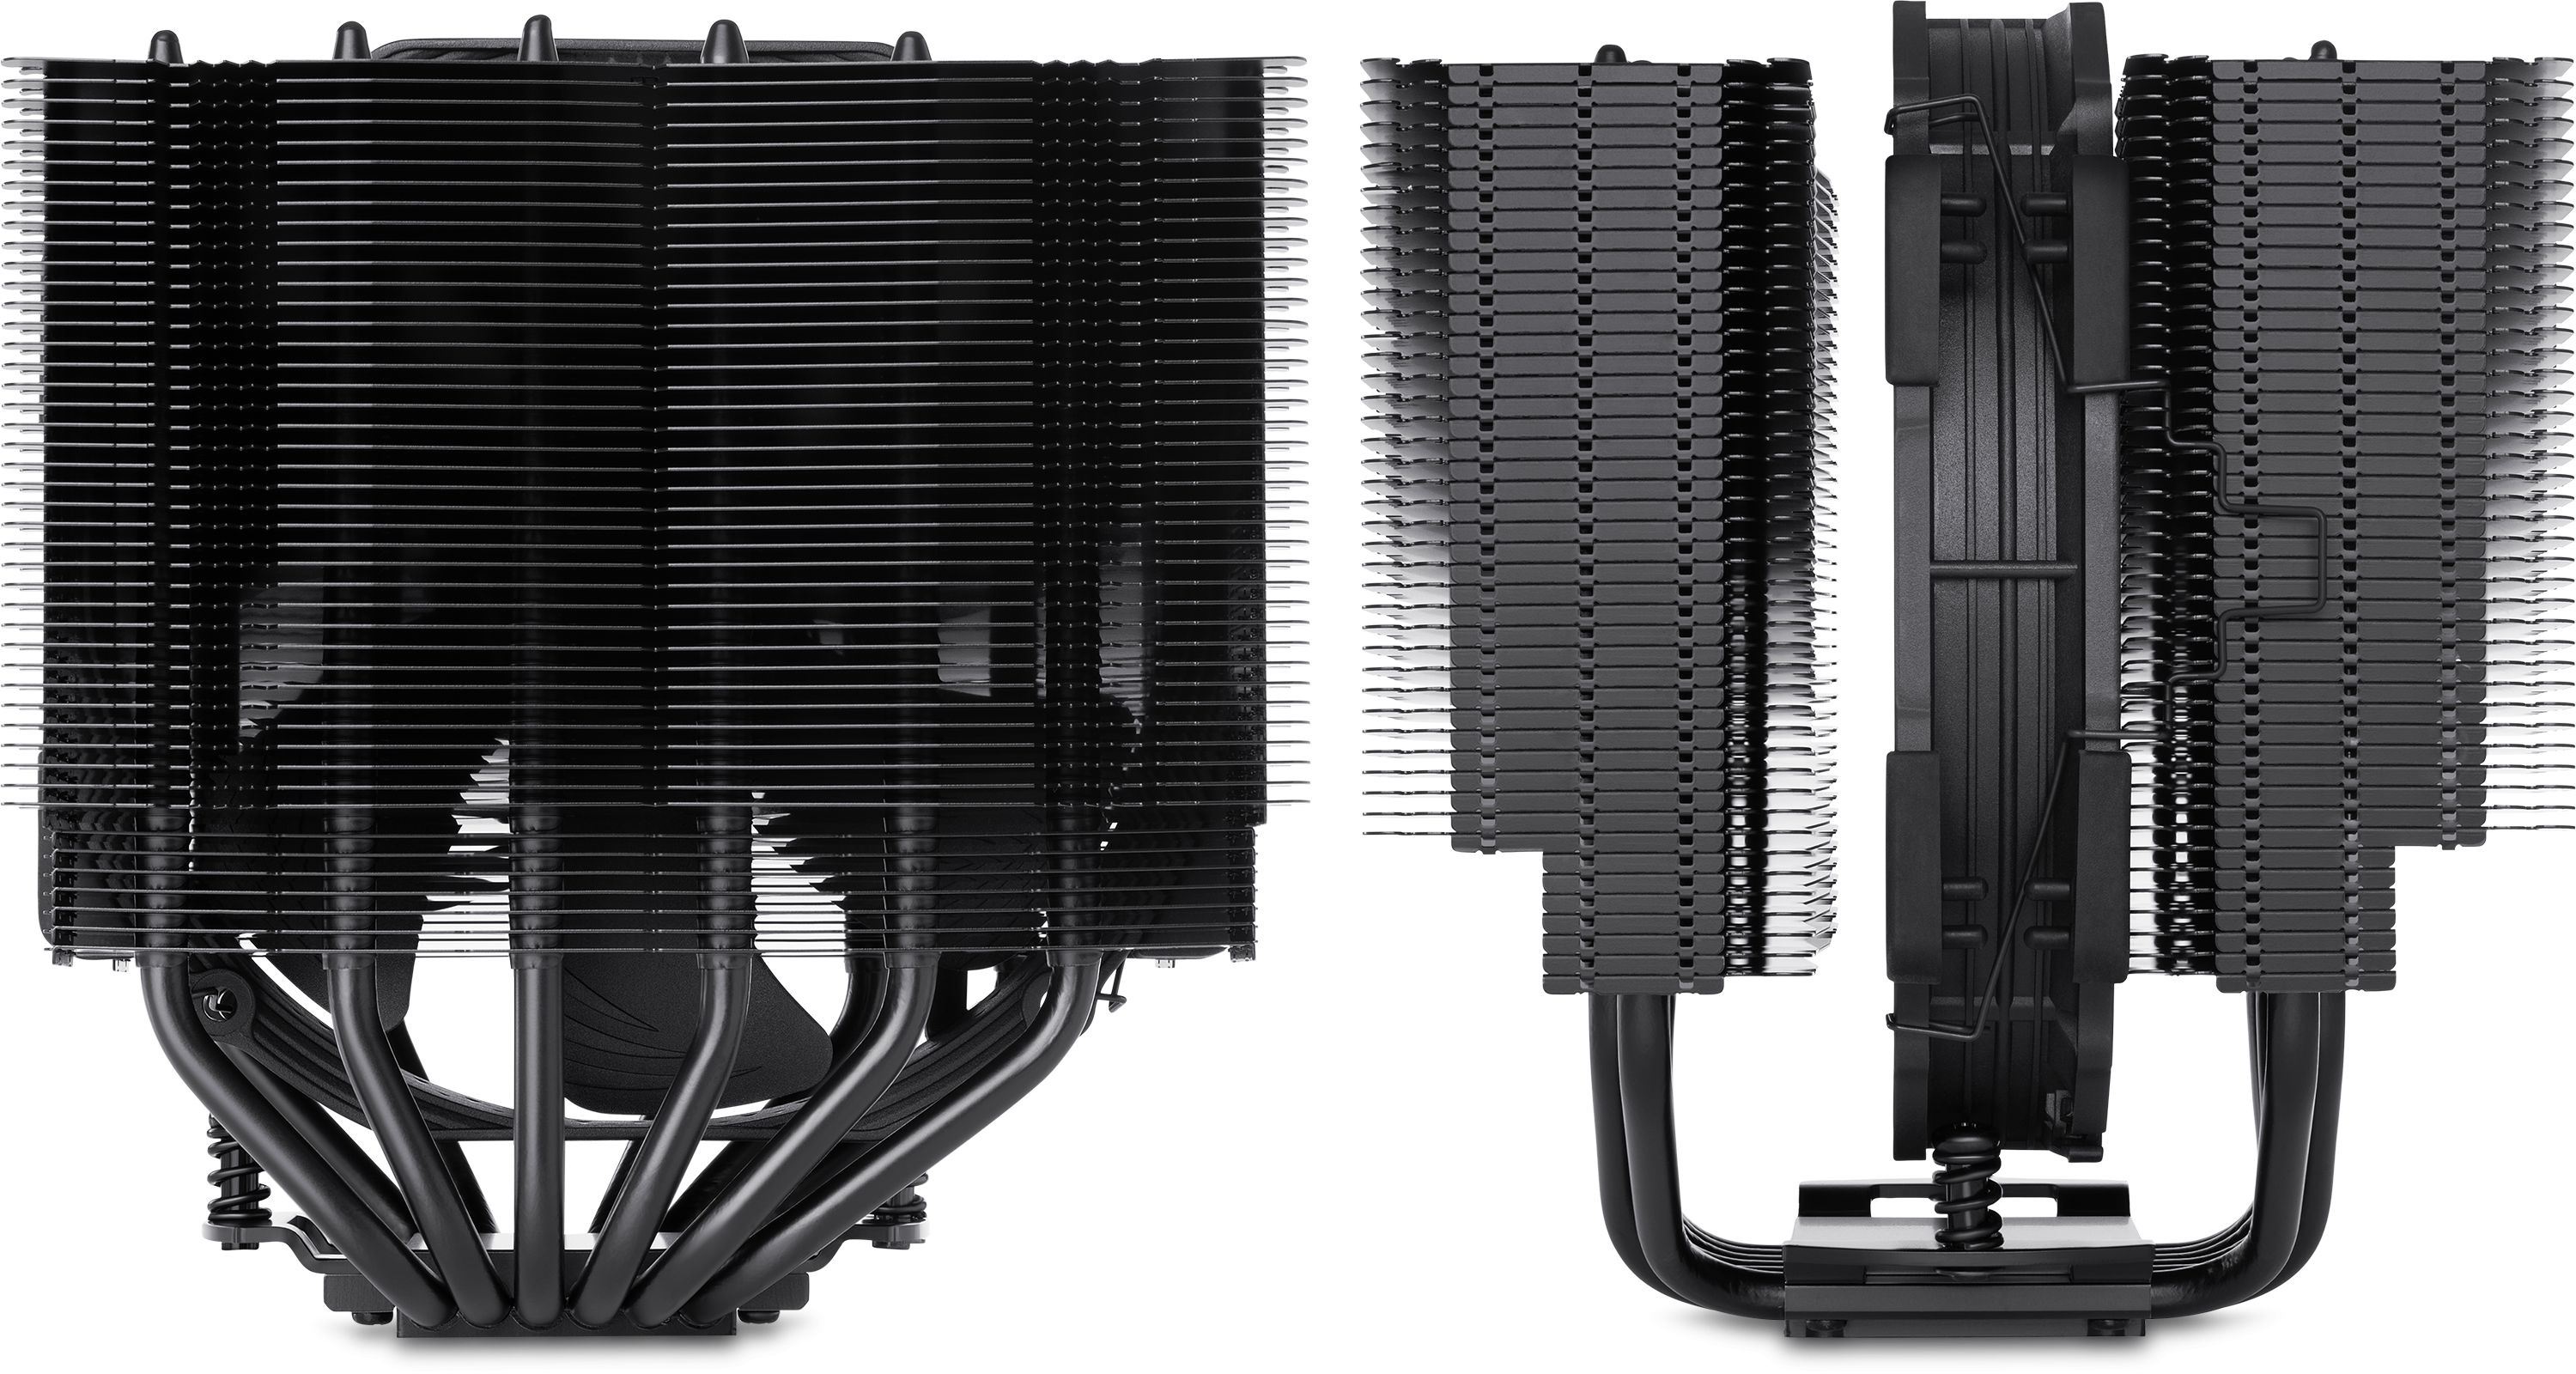 Noctua NH-D15 chromax.Black, Dual-Tower CPU Cooler (140mm, Black)